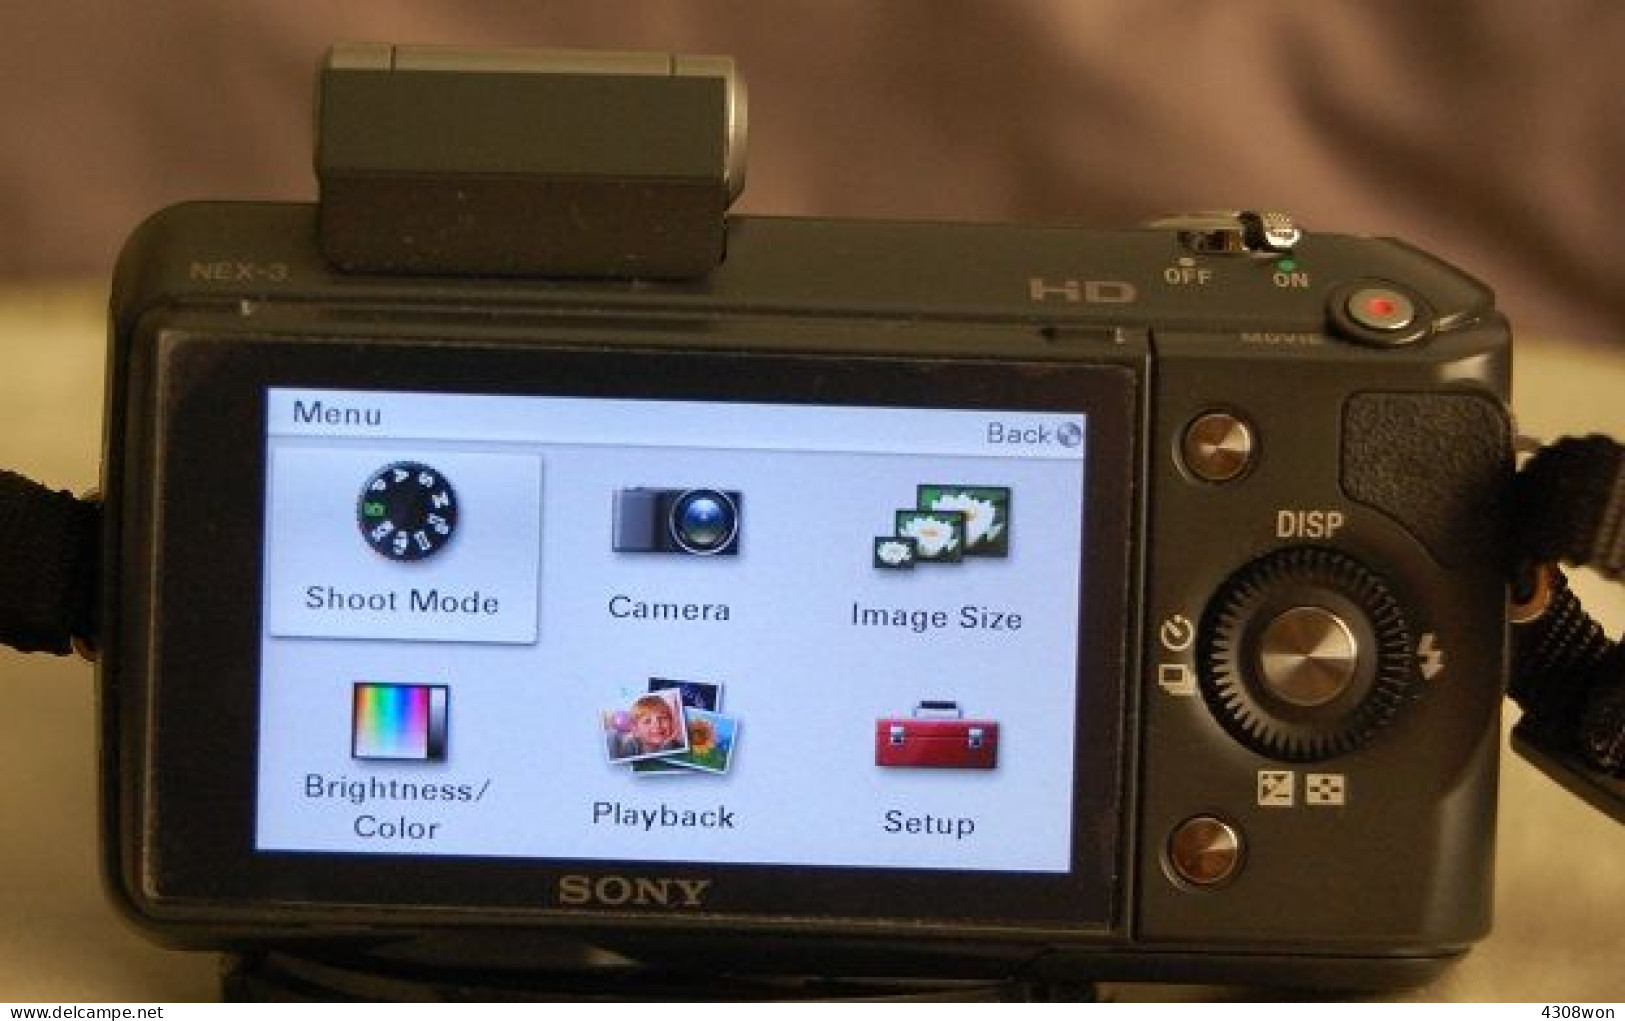 Best C/P! Sony MIRRORLESS Interchange Lens Camera + 18-55 Mm Lens - Appareils Photo